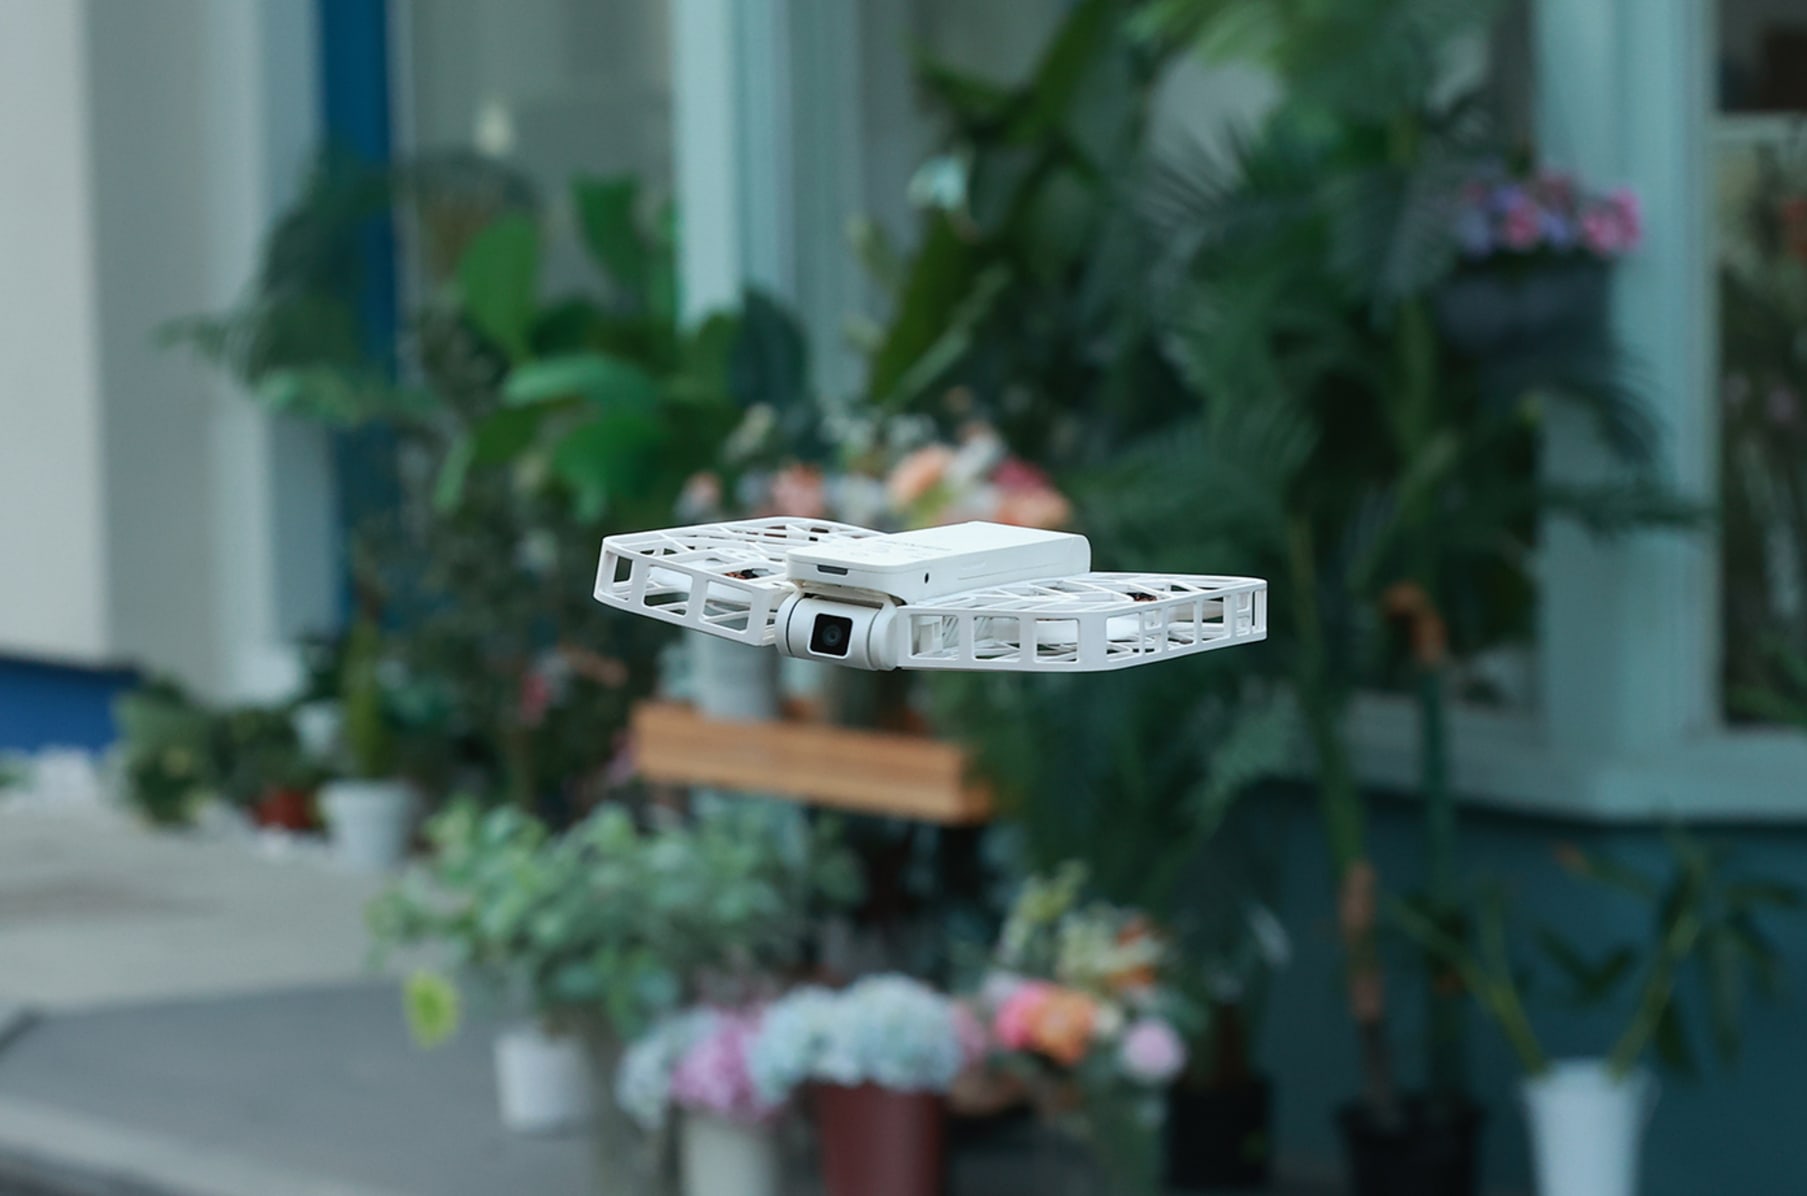 HOVERAir X1 Pocket-Sized Self-Flying Camera